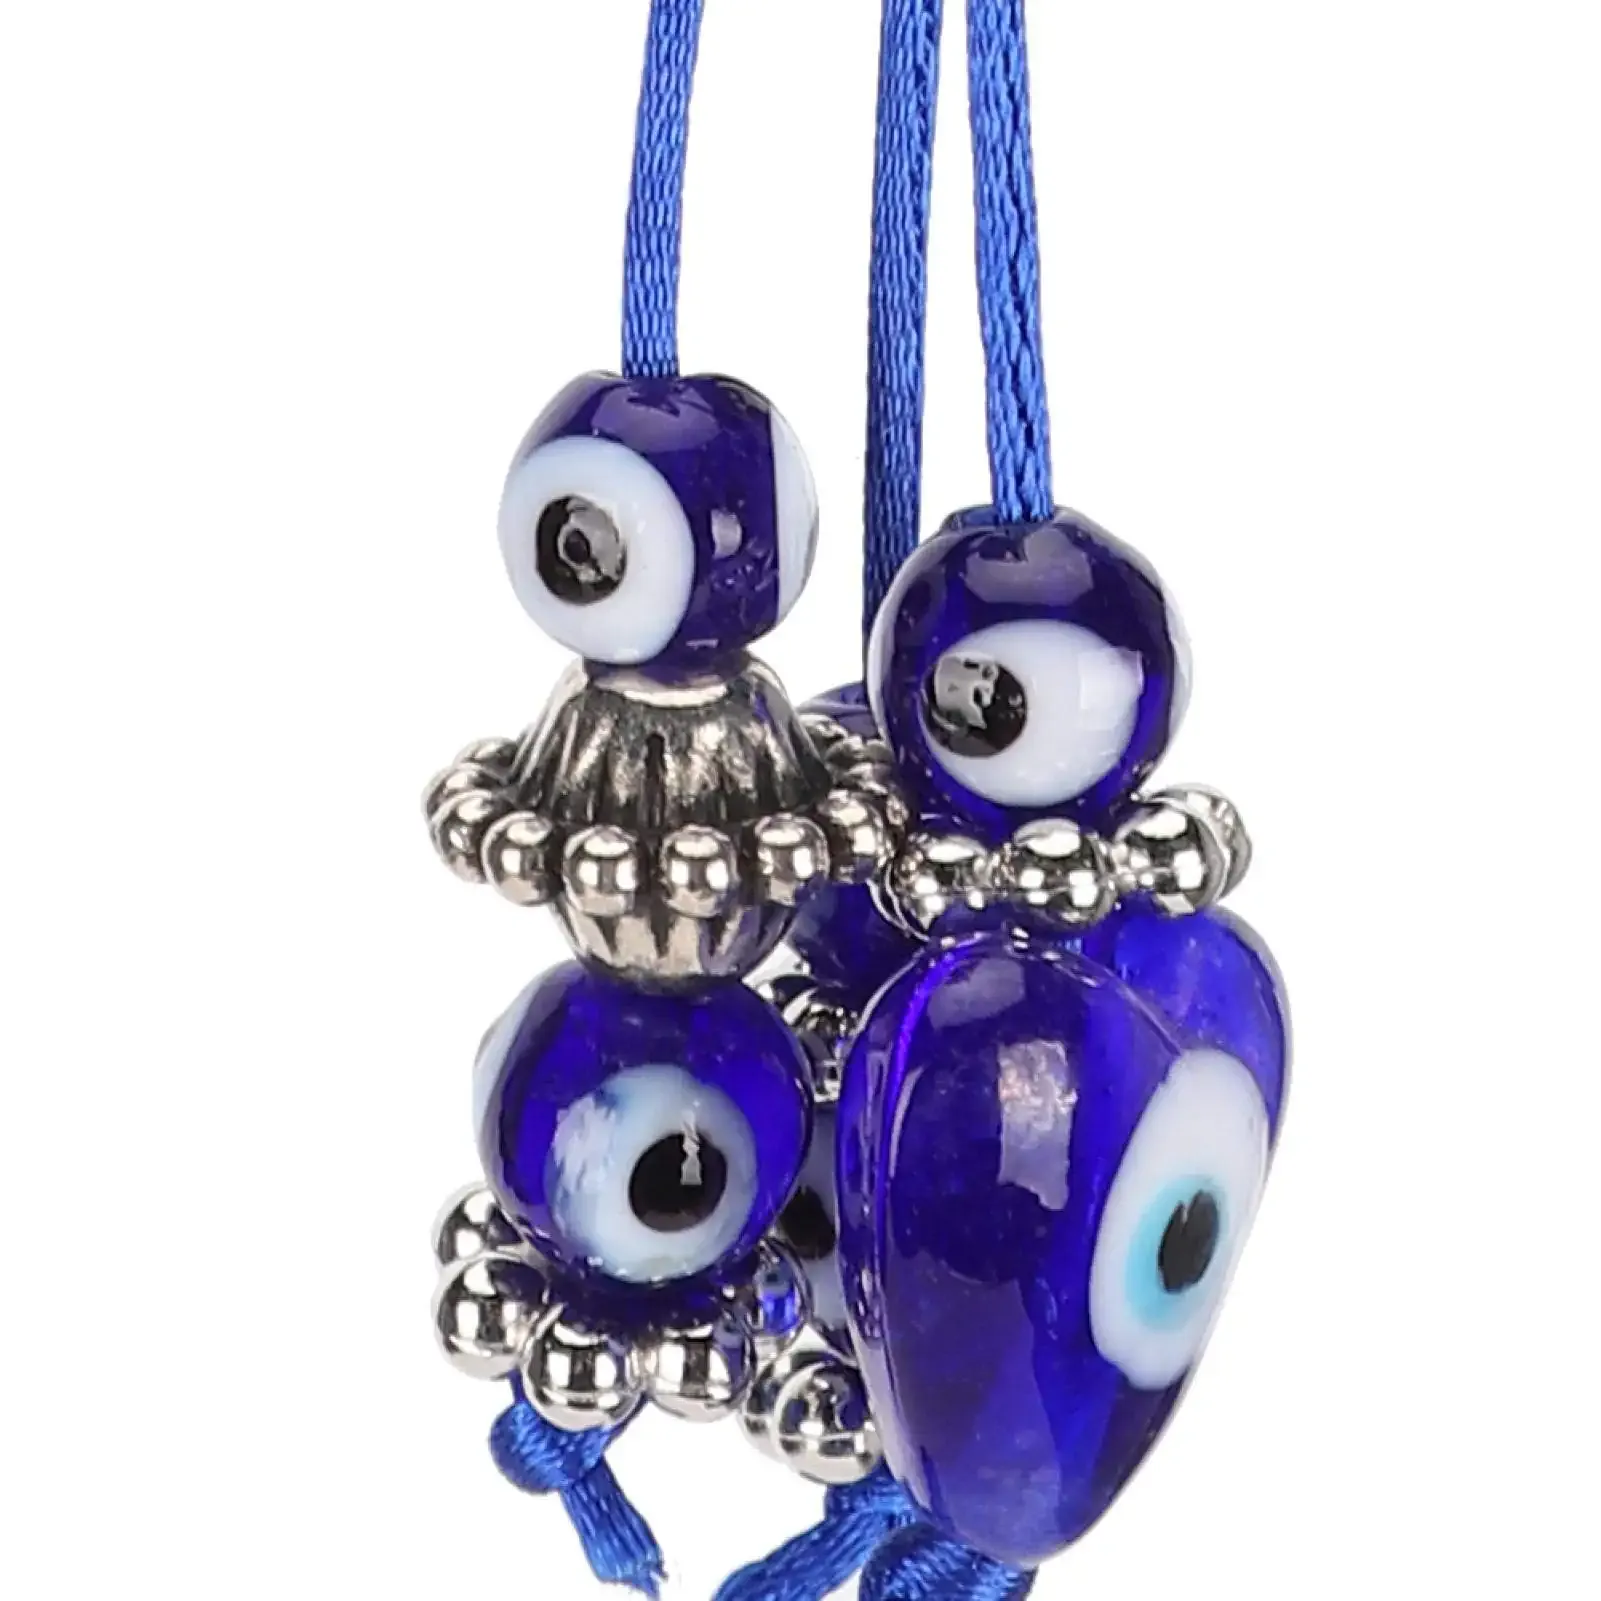 3ml blue evil eye keychain turkish amulet charm pendant lucky charm ion tassel hanger fashion jewelry car accessories gift